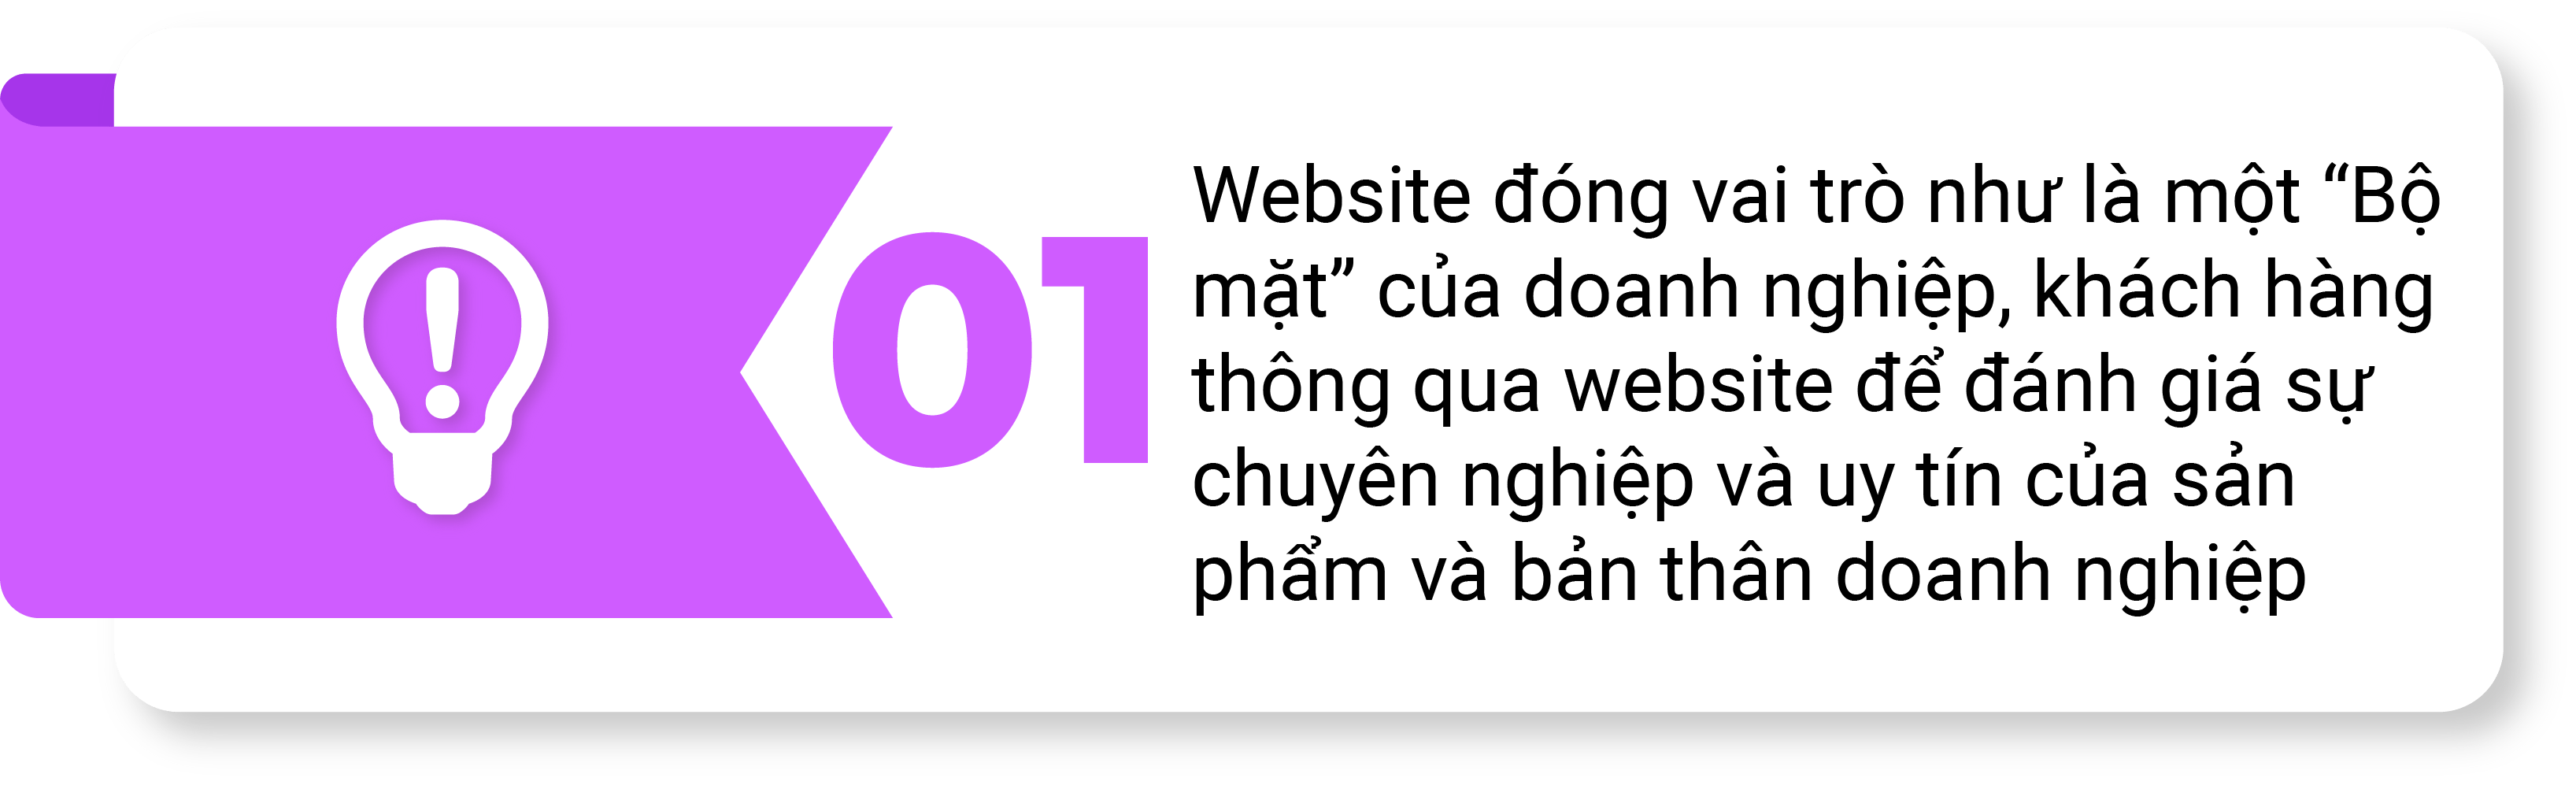 websit-dong-vai-tro1